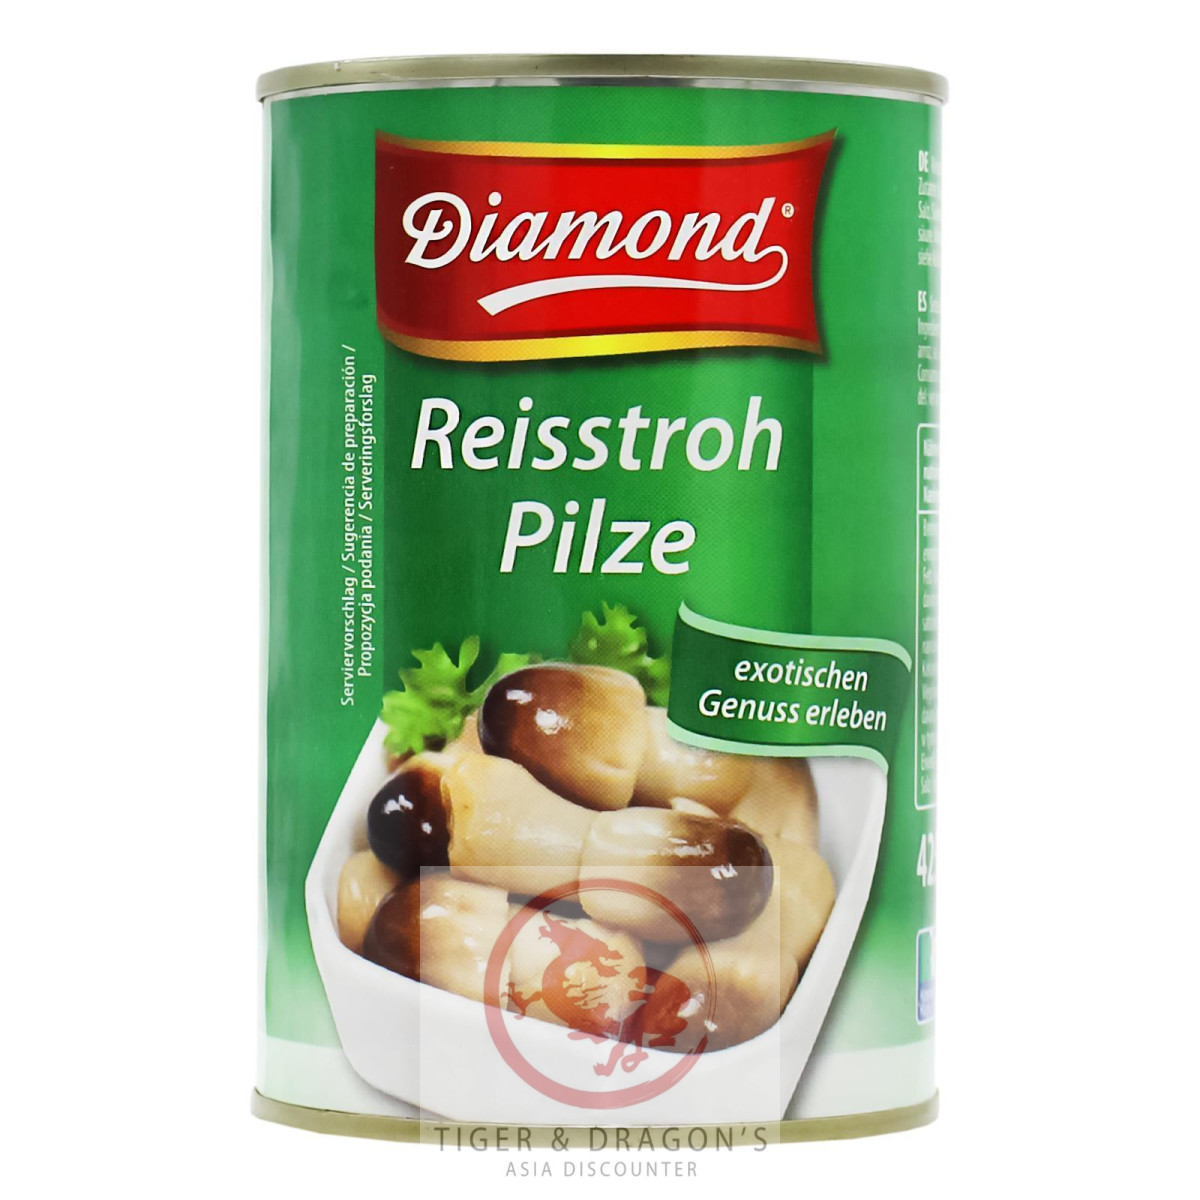 Diamond Reisstroh Pilze 425g/200g